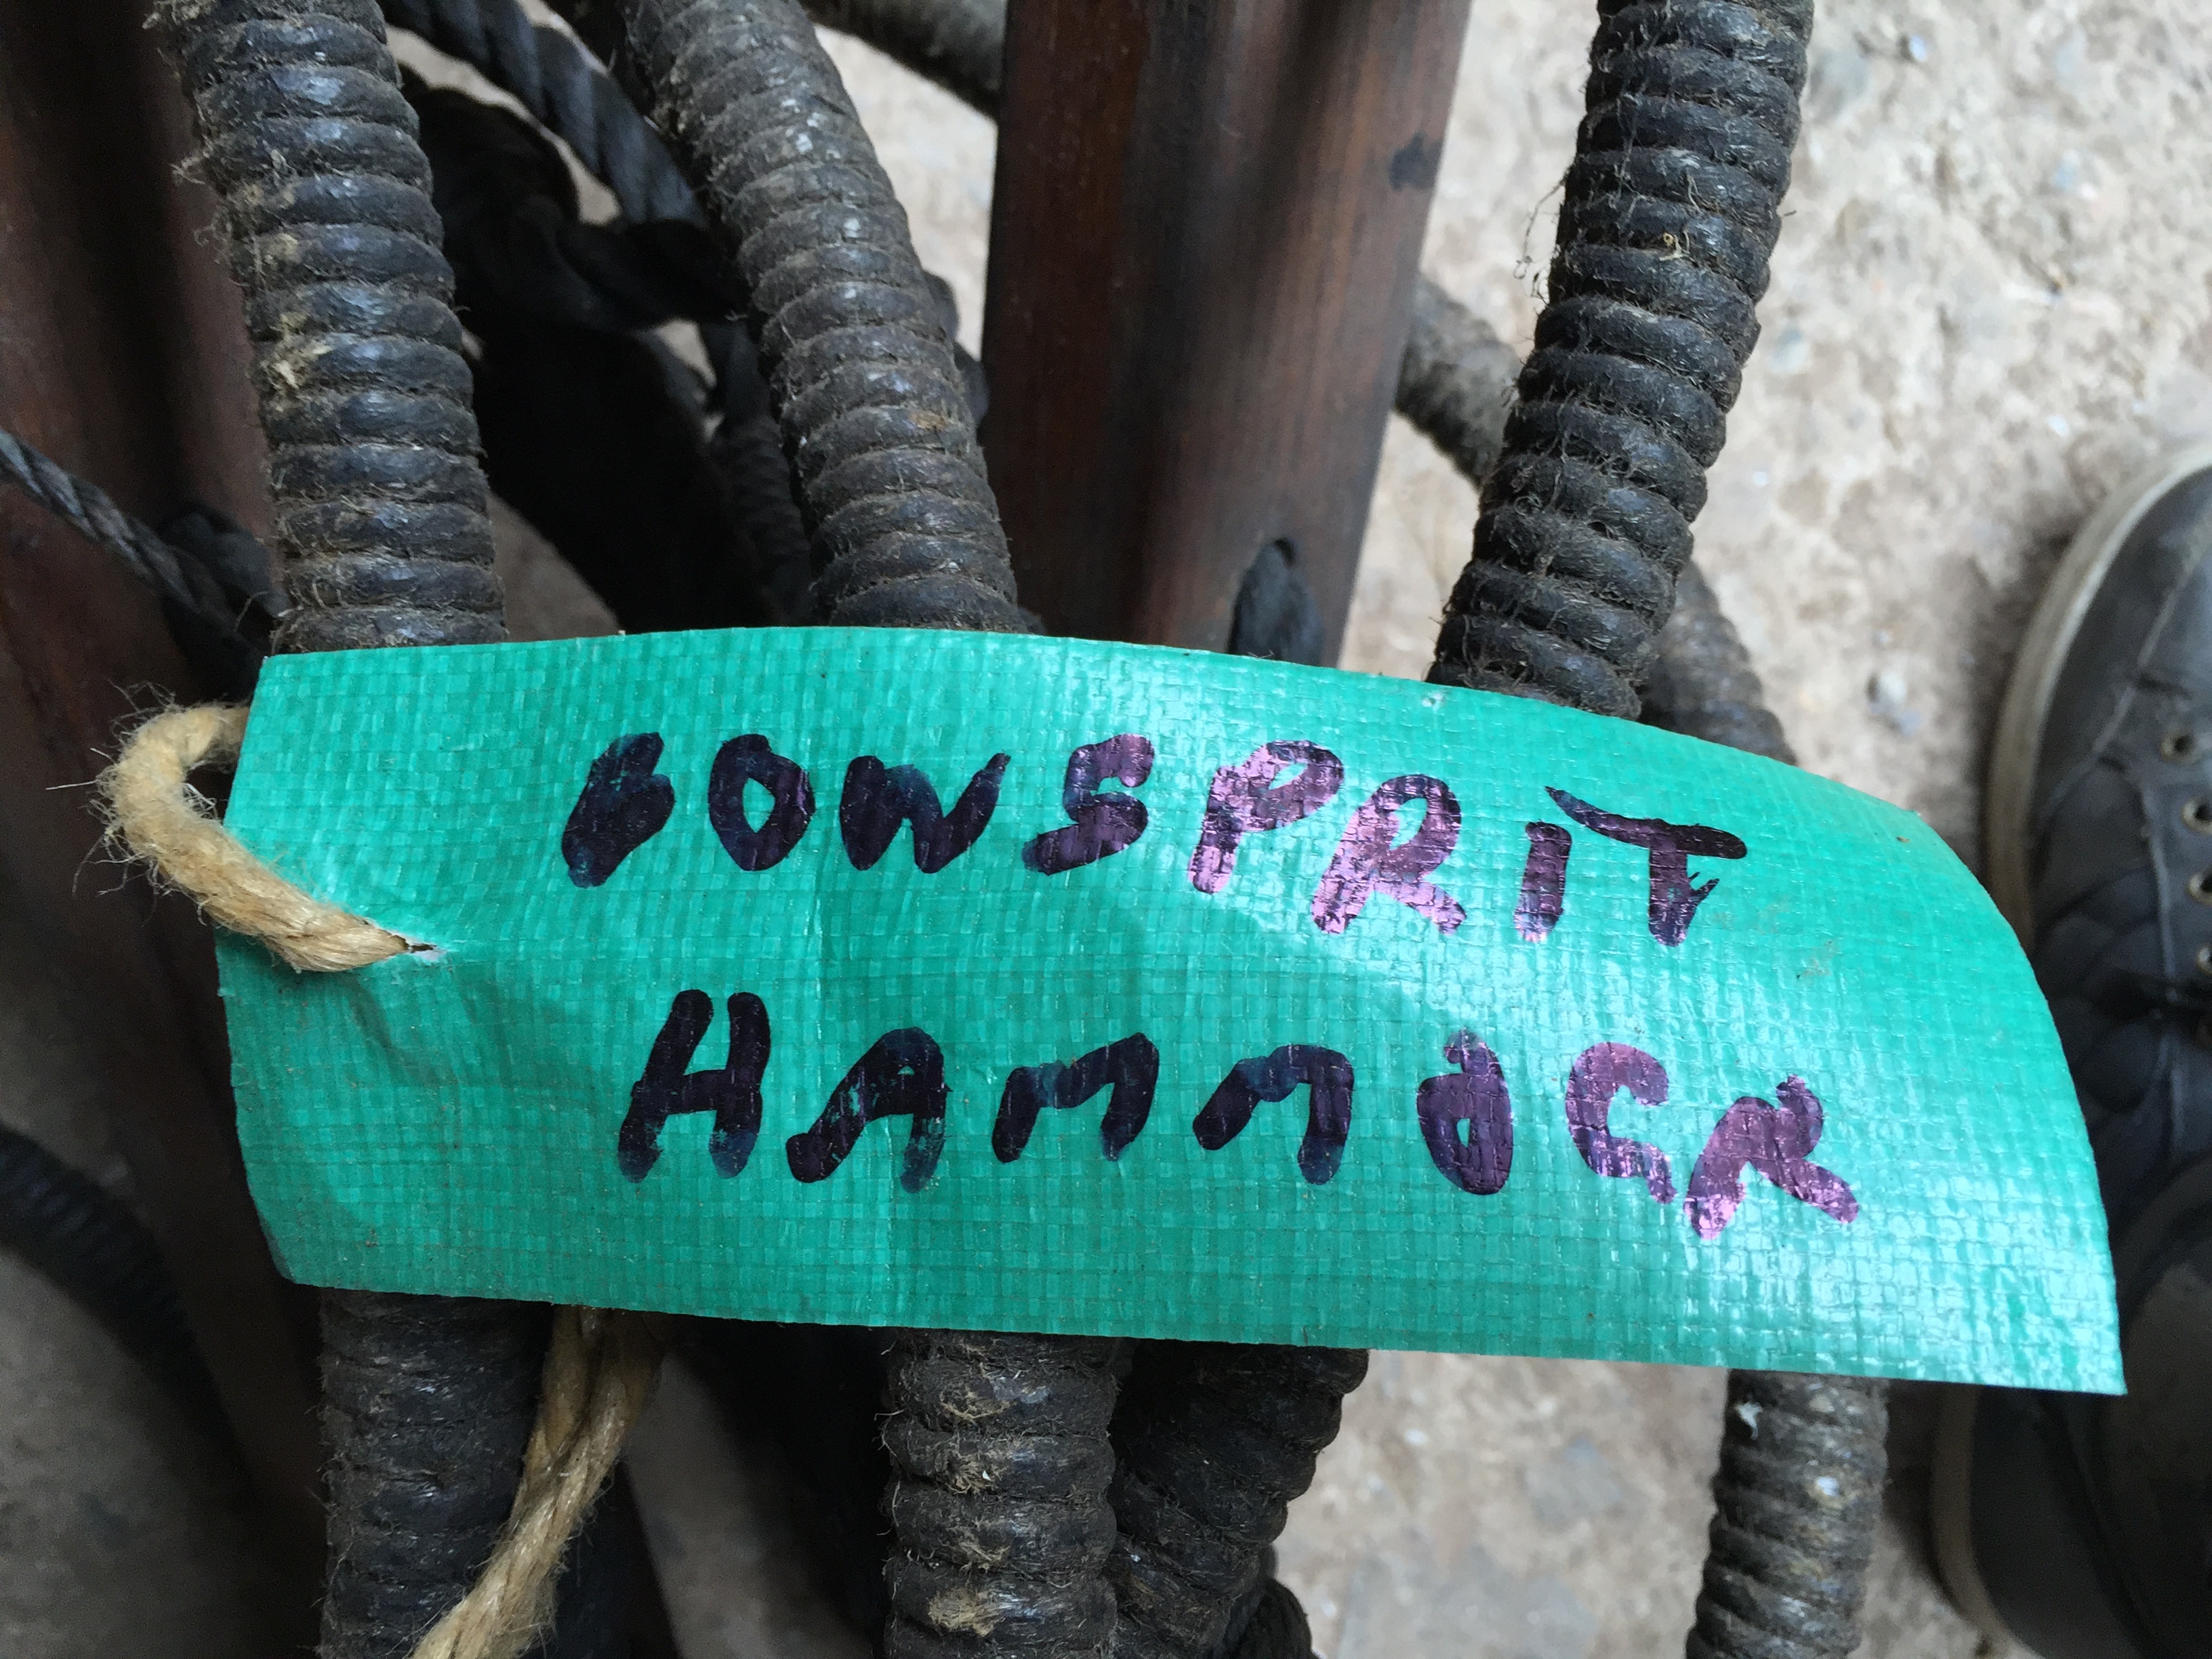 A bowsprit hammock. - Image 3 of 3